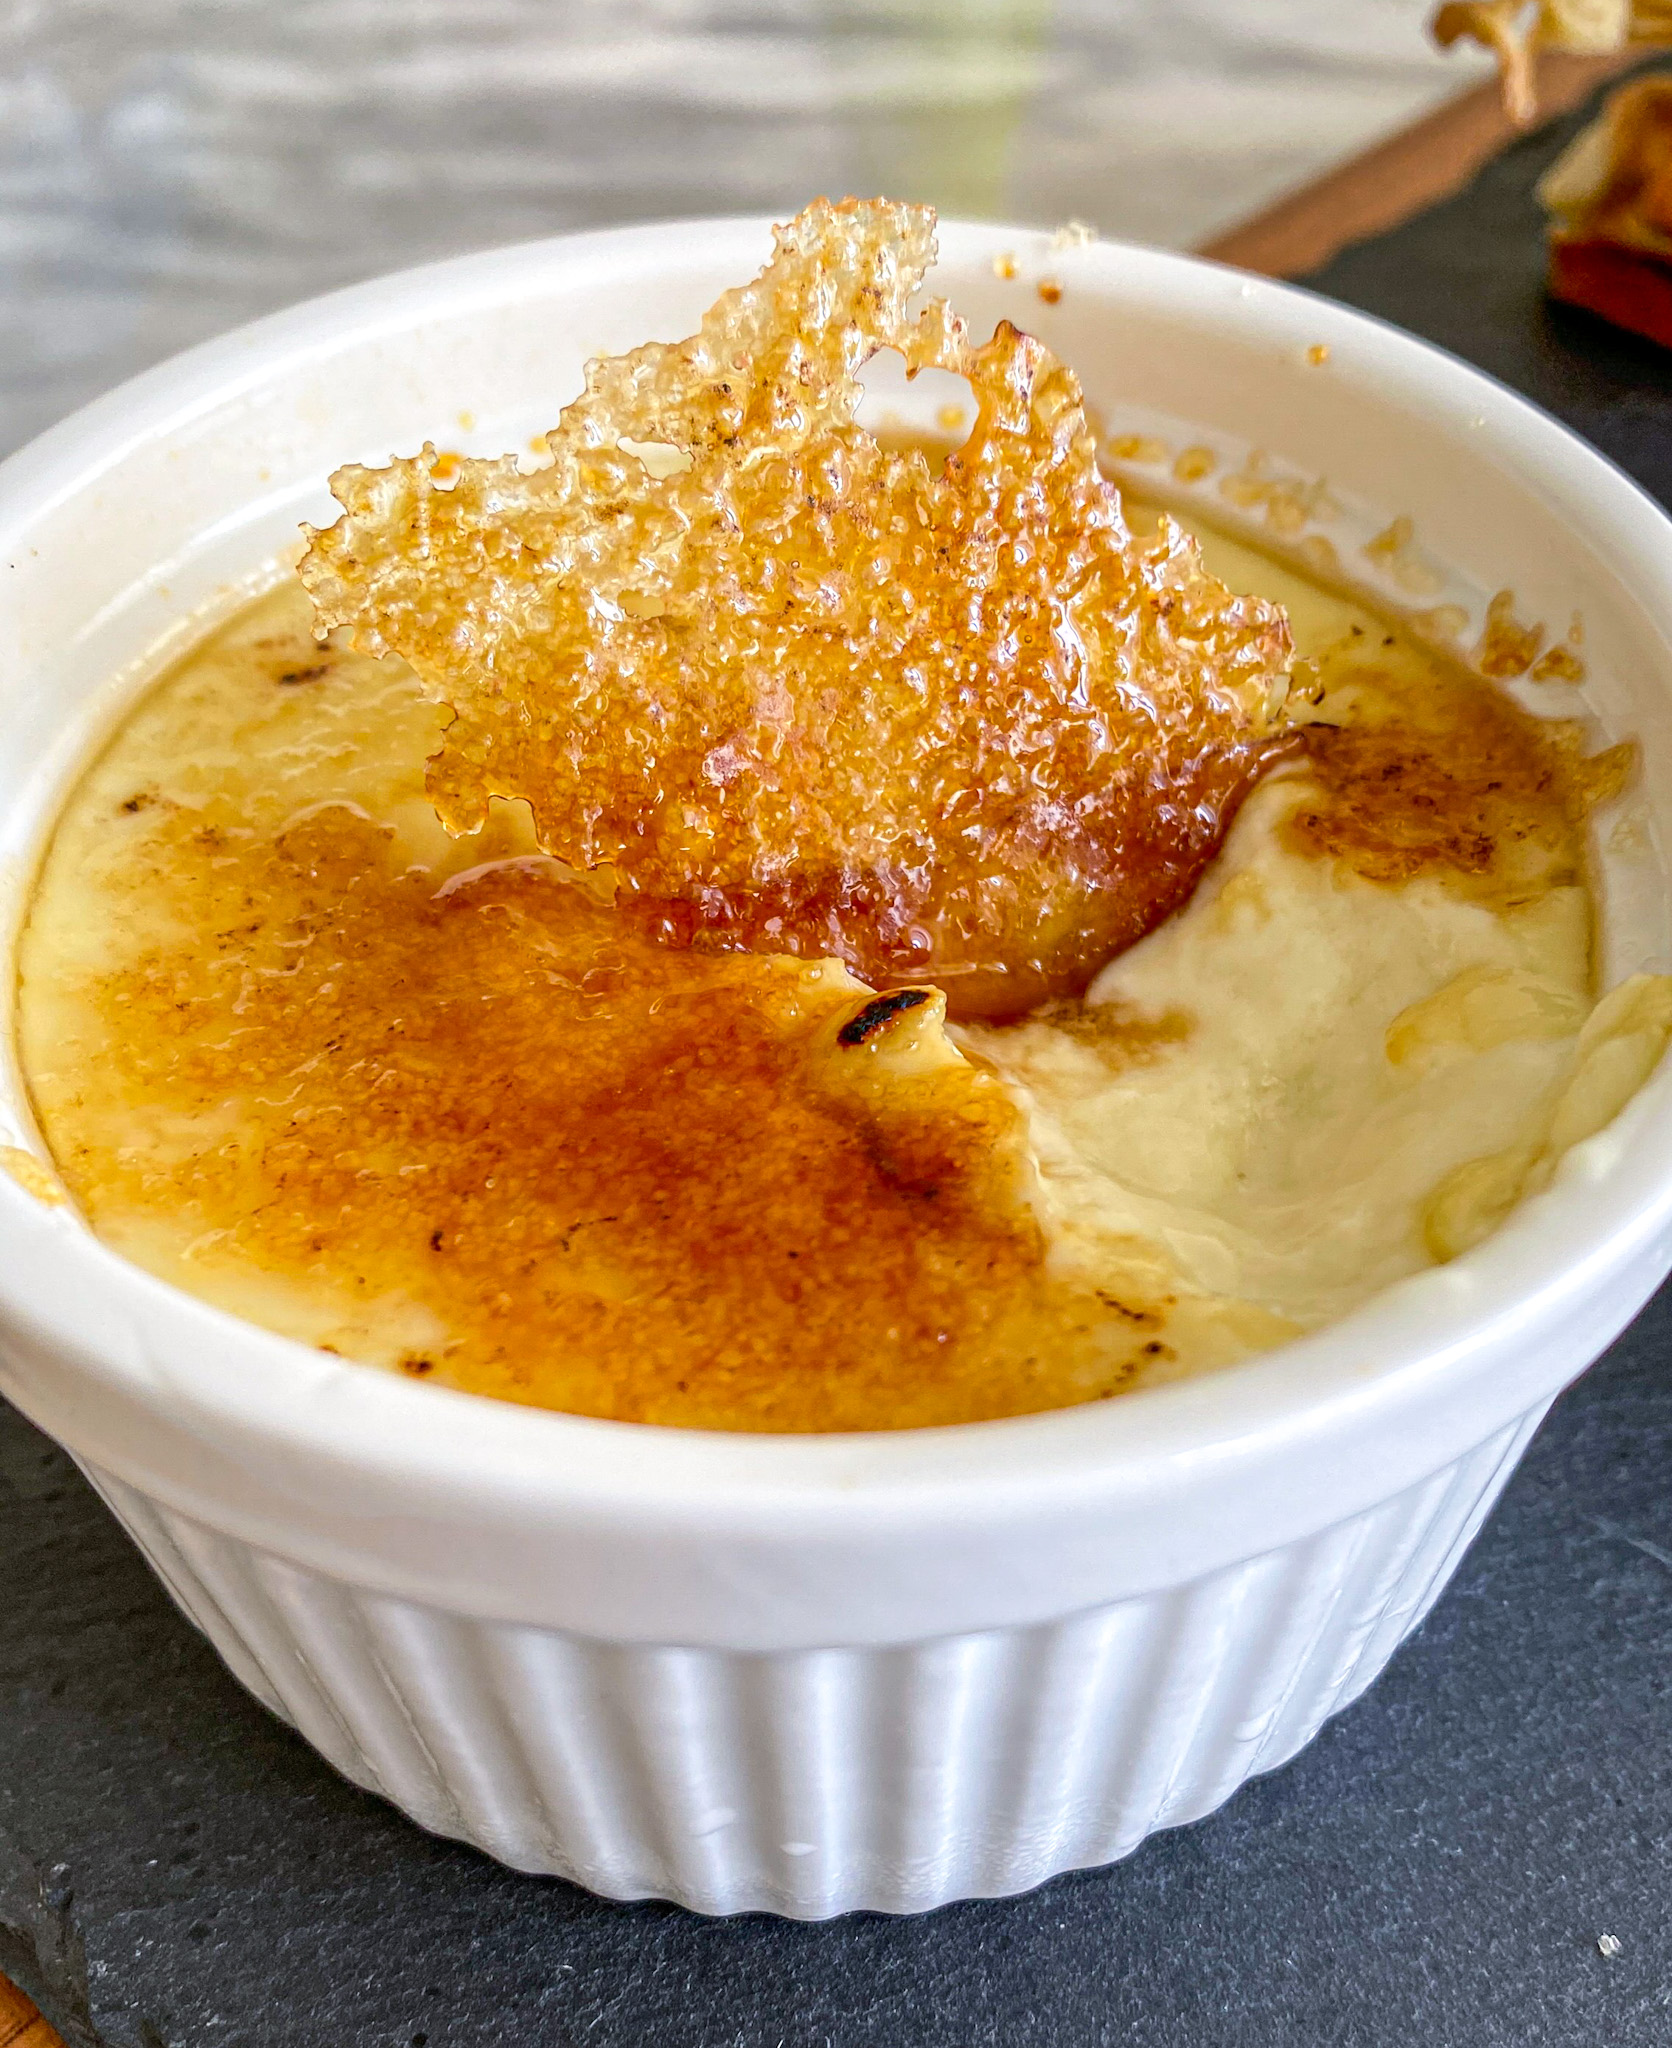 Delicious vegan crème brûlée made with the crispy golden crust on top